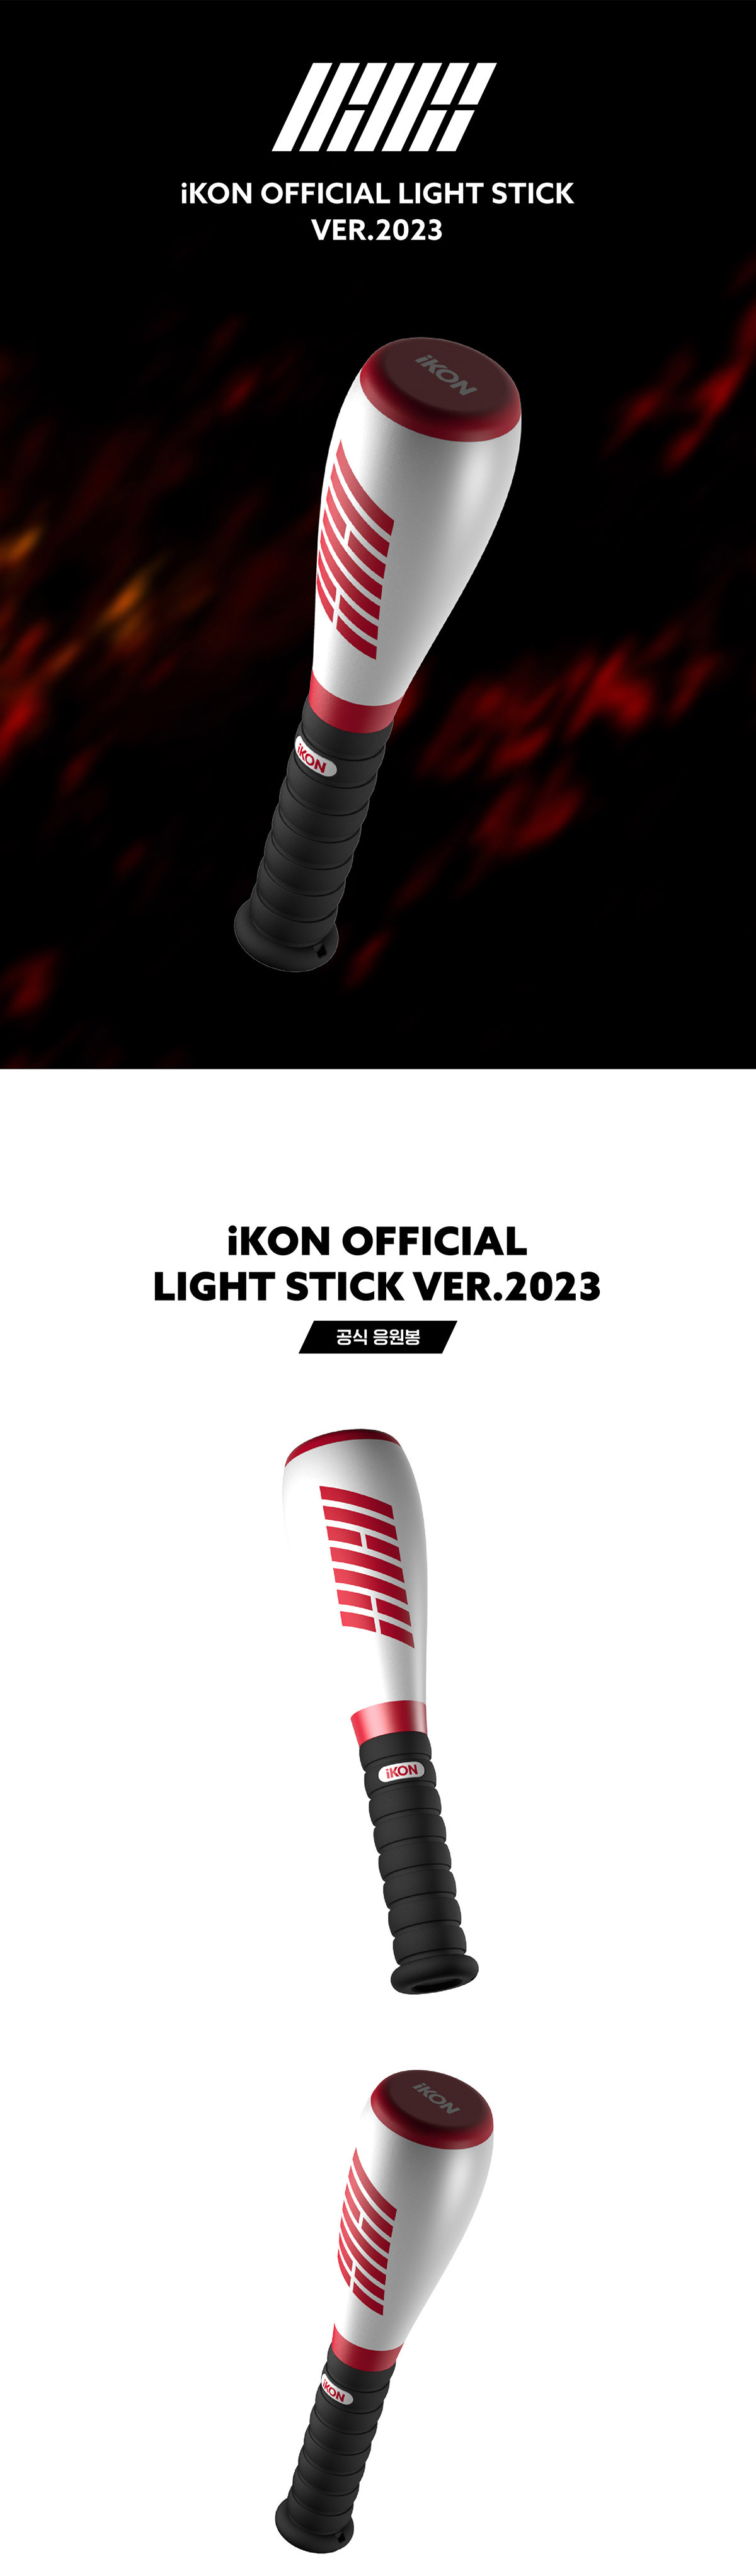 0ikon-light-stick-2023-01